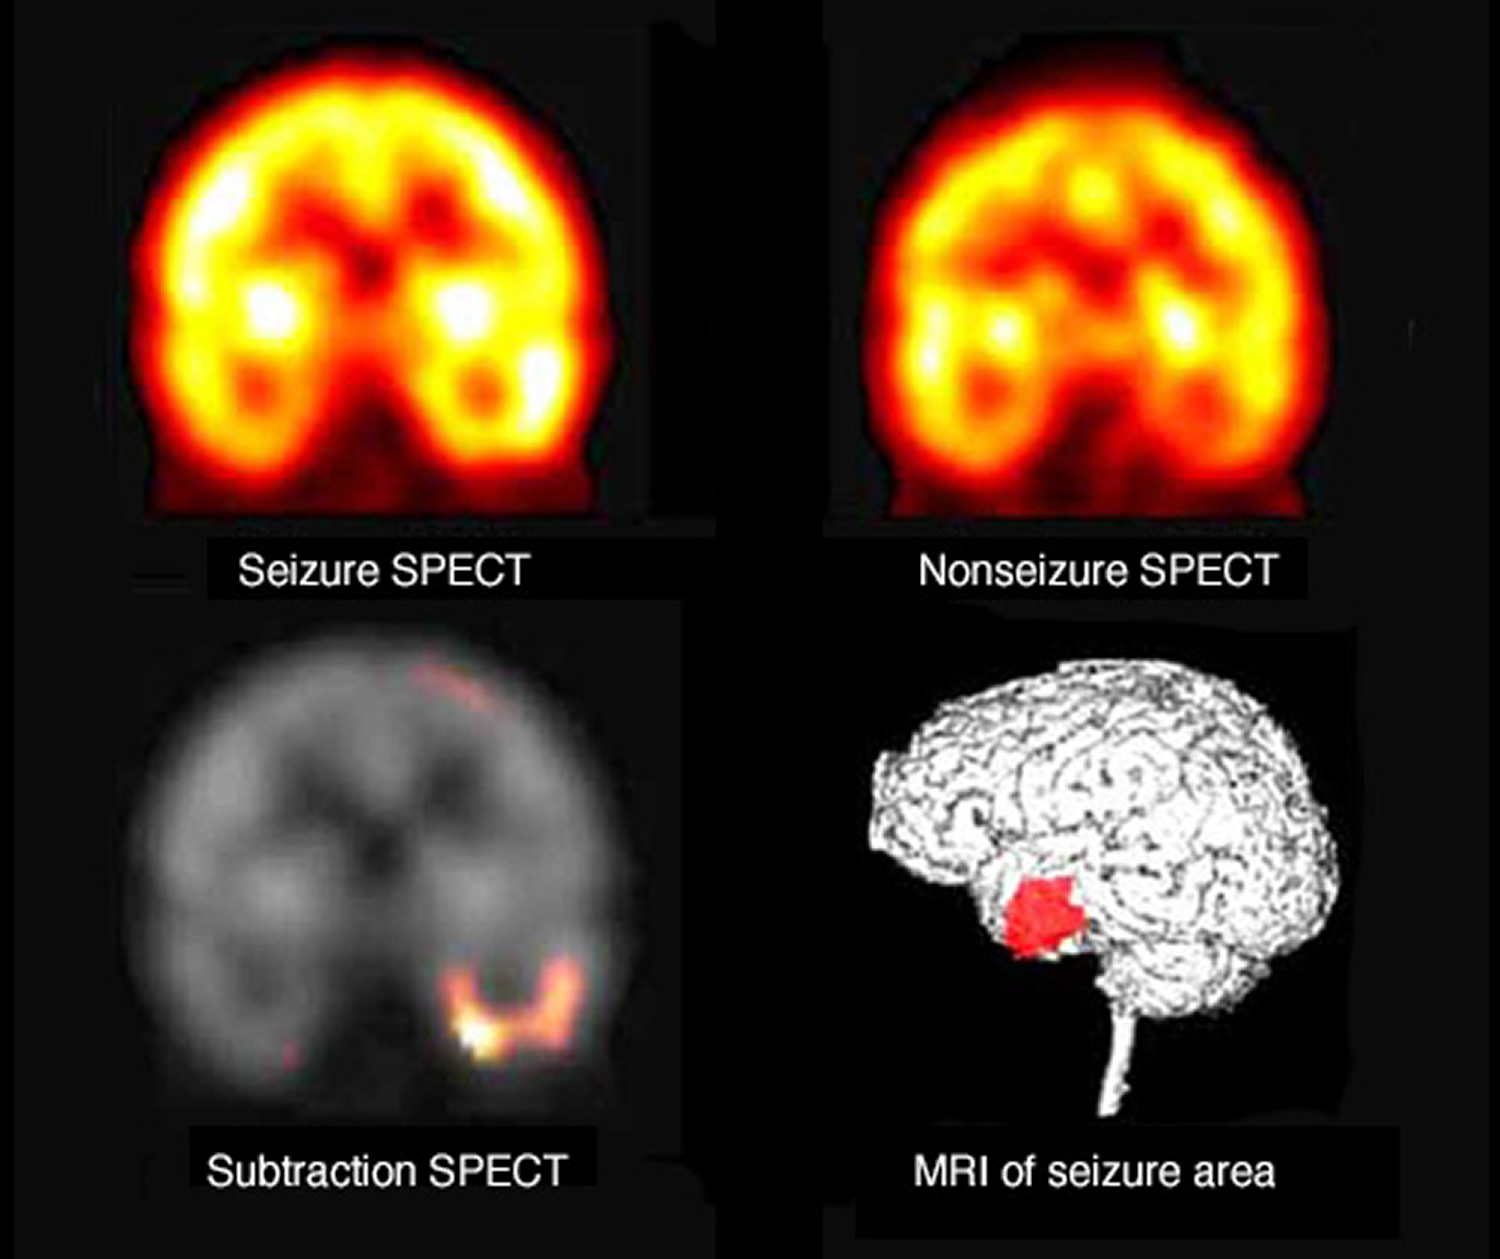 SPECT scans for diagnosing seizures